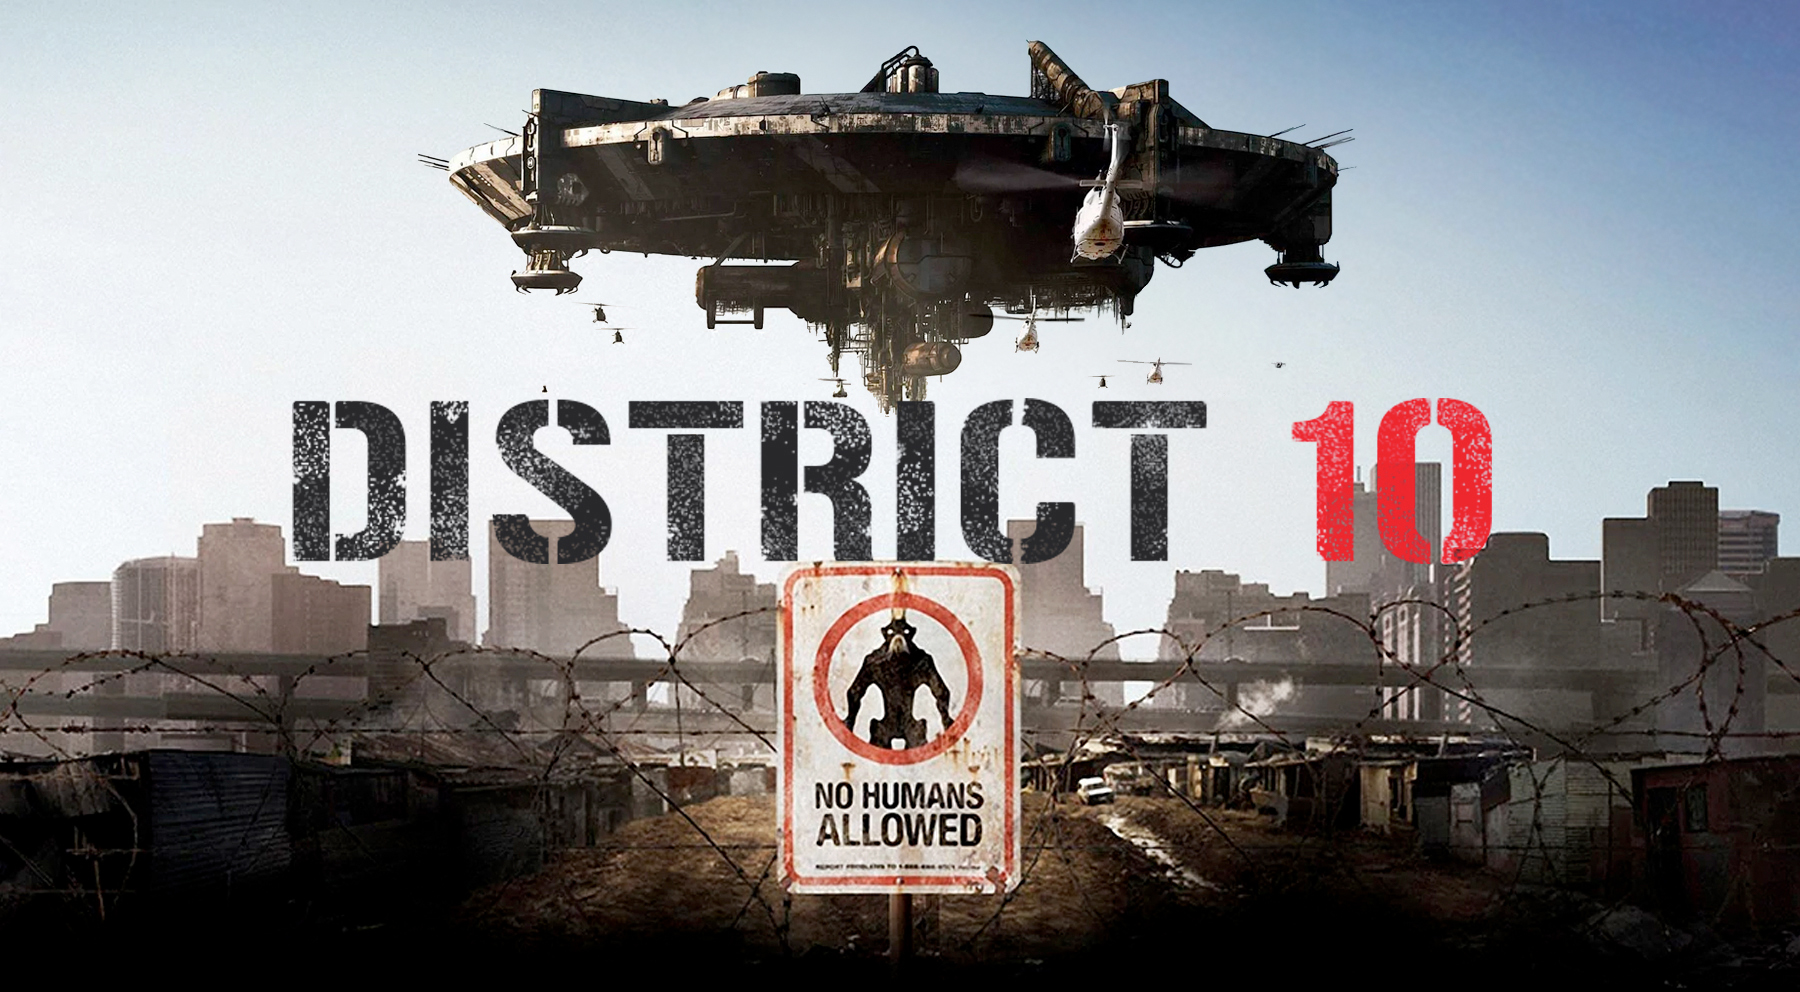 District 9 / District 9 (2009)